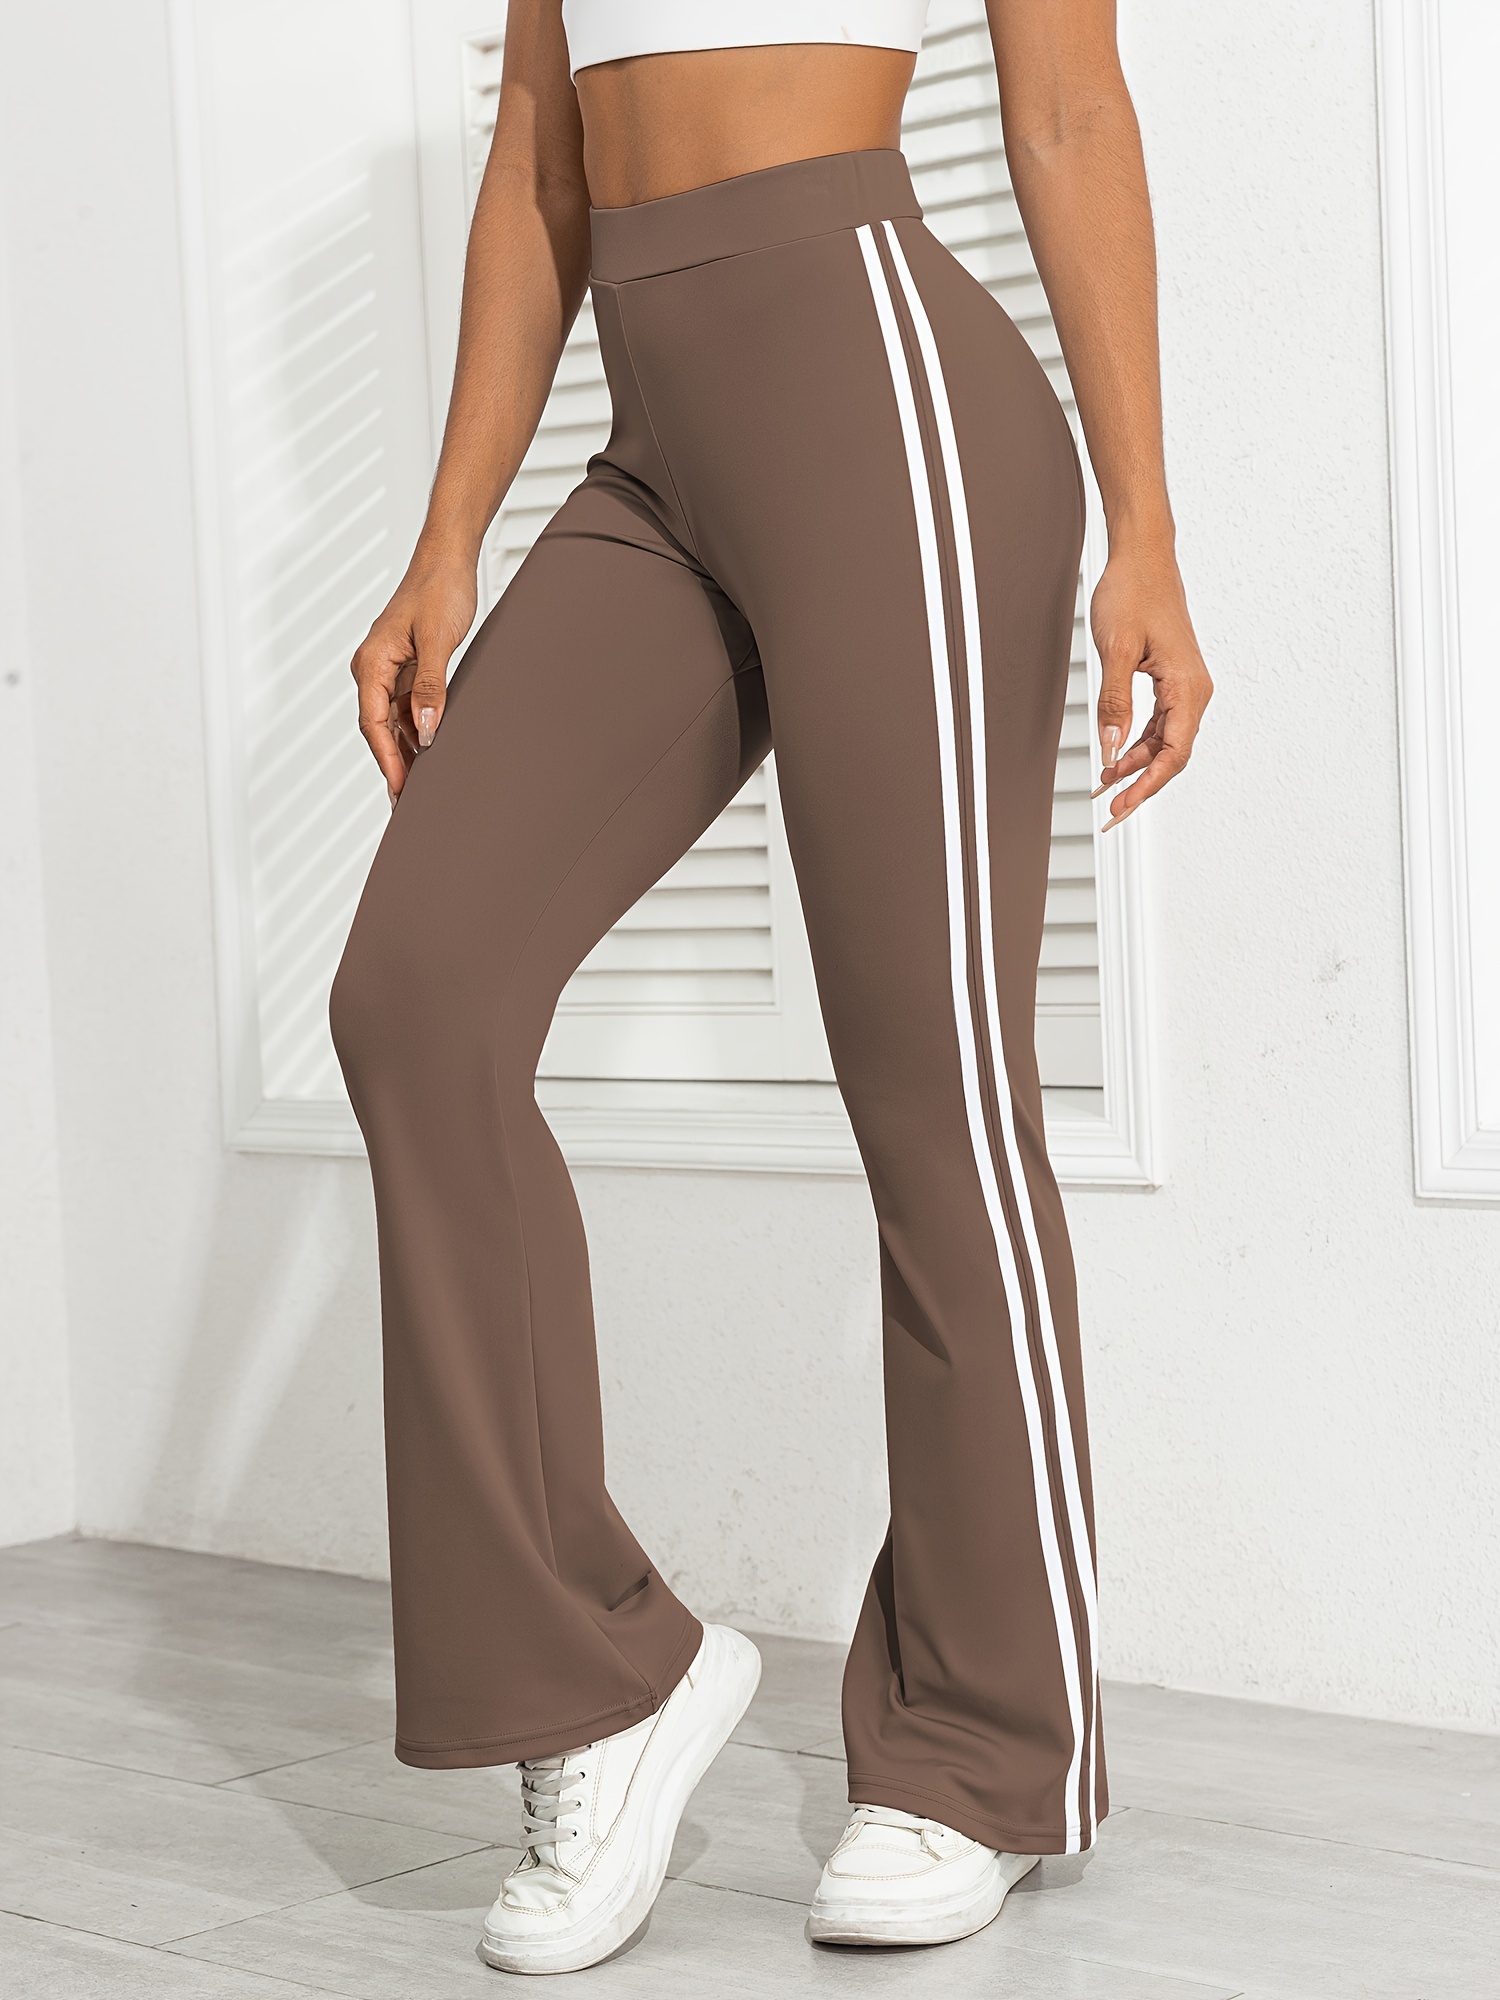 Vanya Fashion Half Stripe Yoga Pants for Women High Waisted